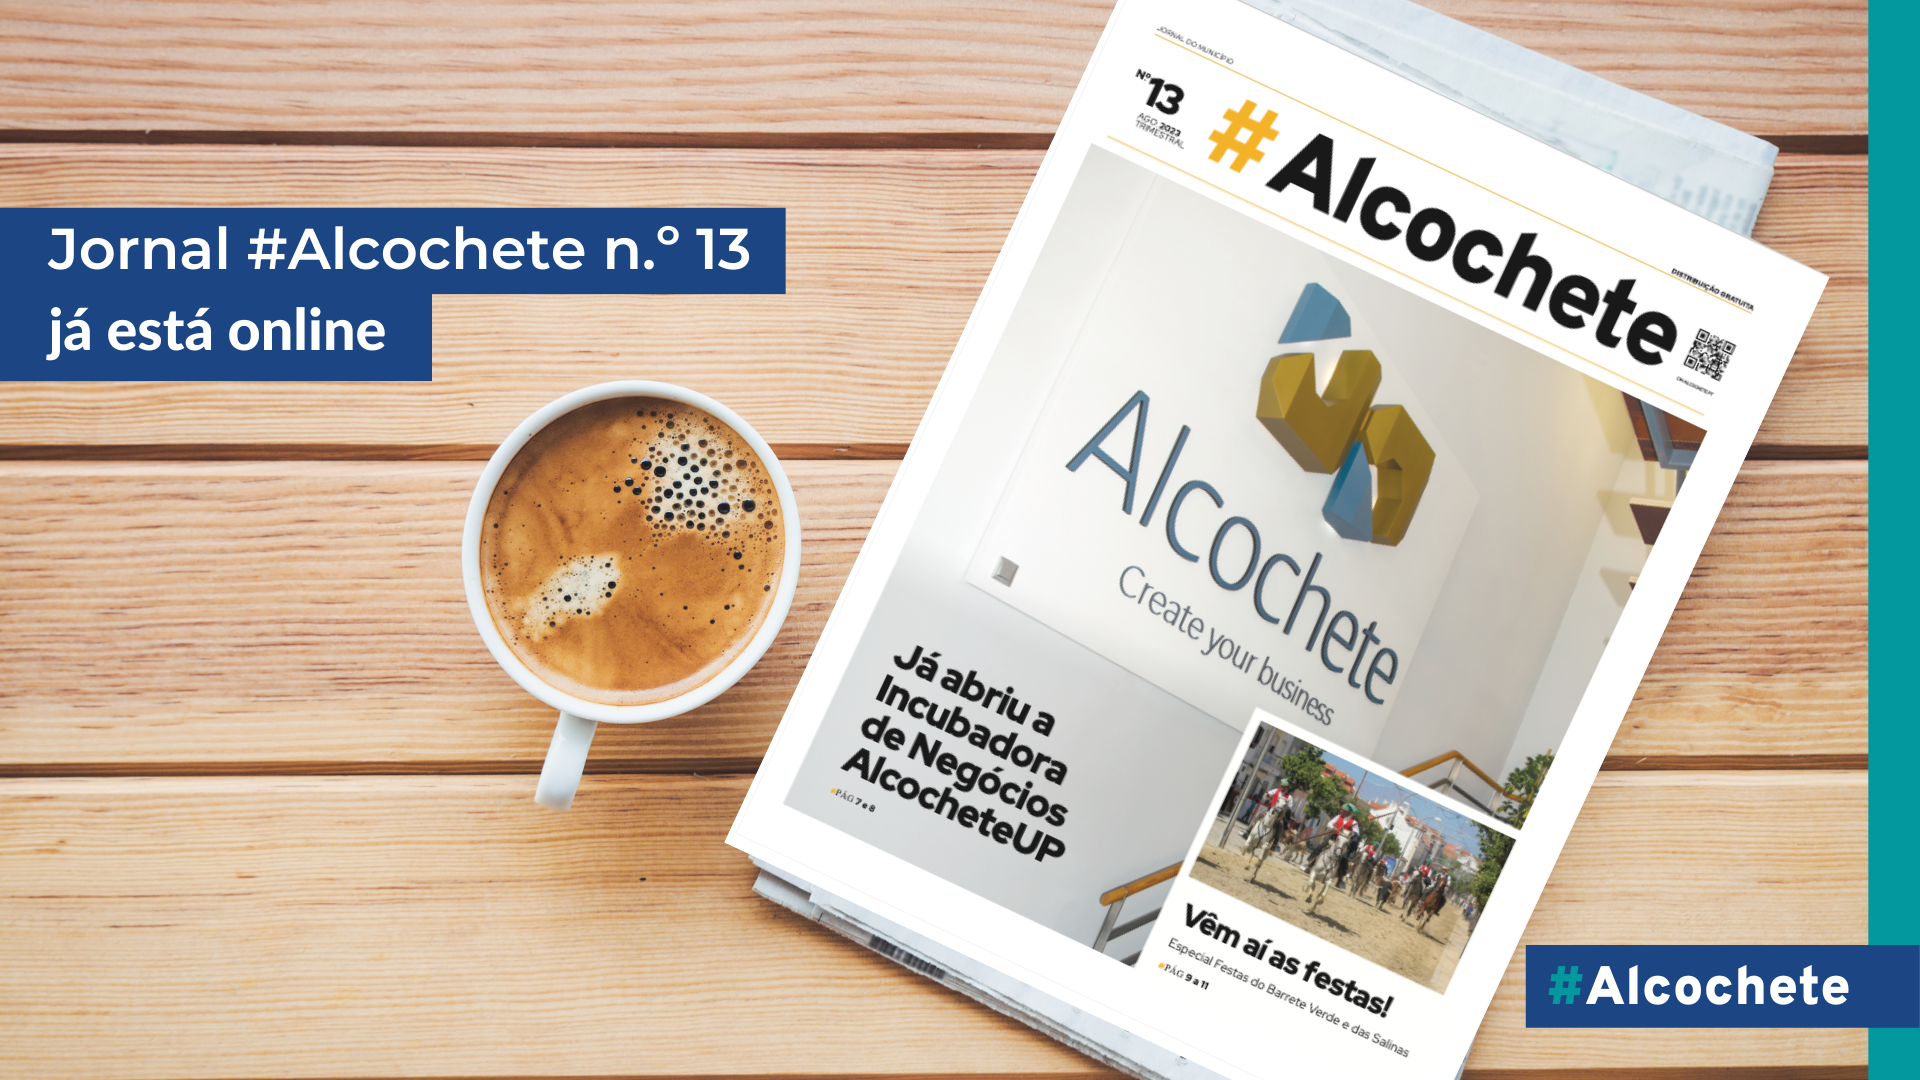 Jornal #Alcochete N.º 13 já está online